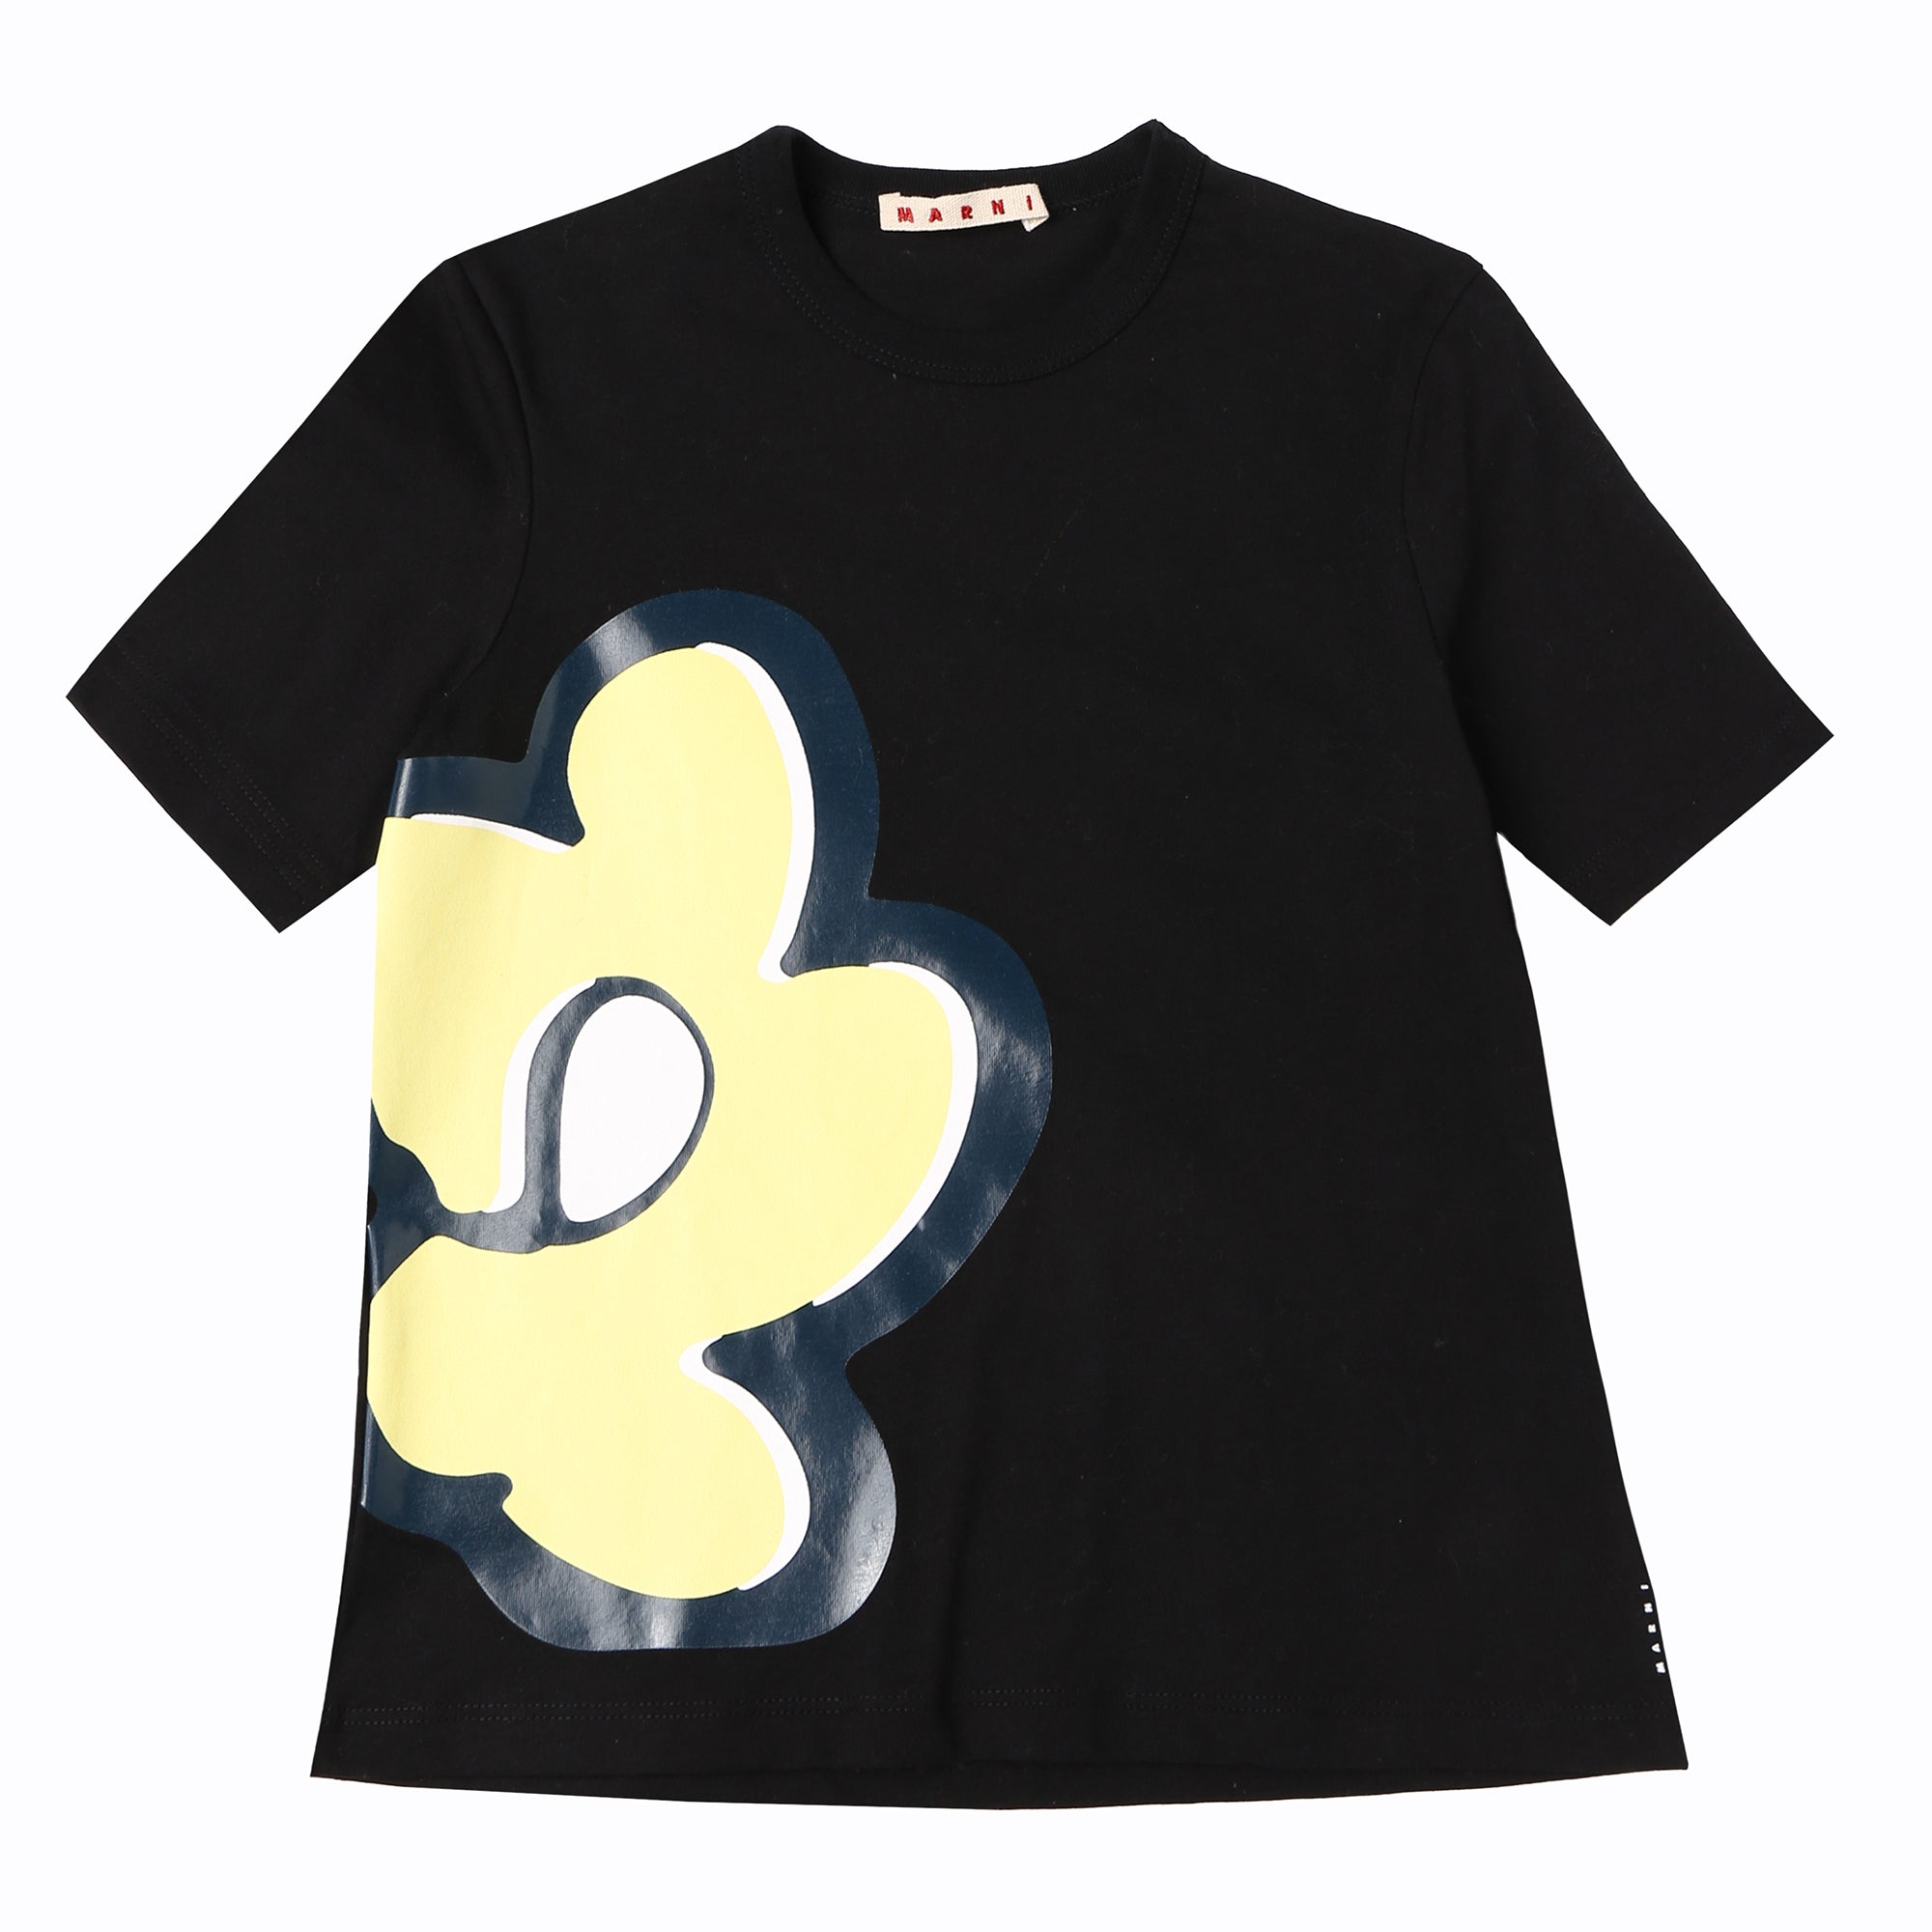 Girls Black Flower Cotton T-shirt